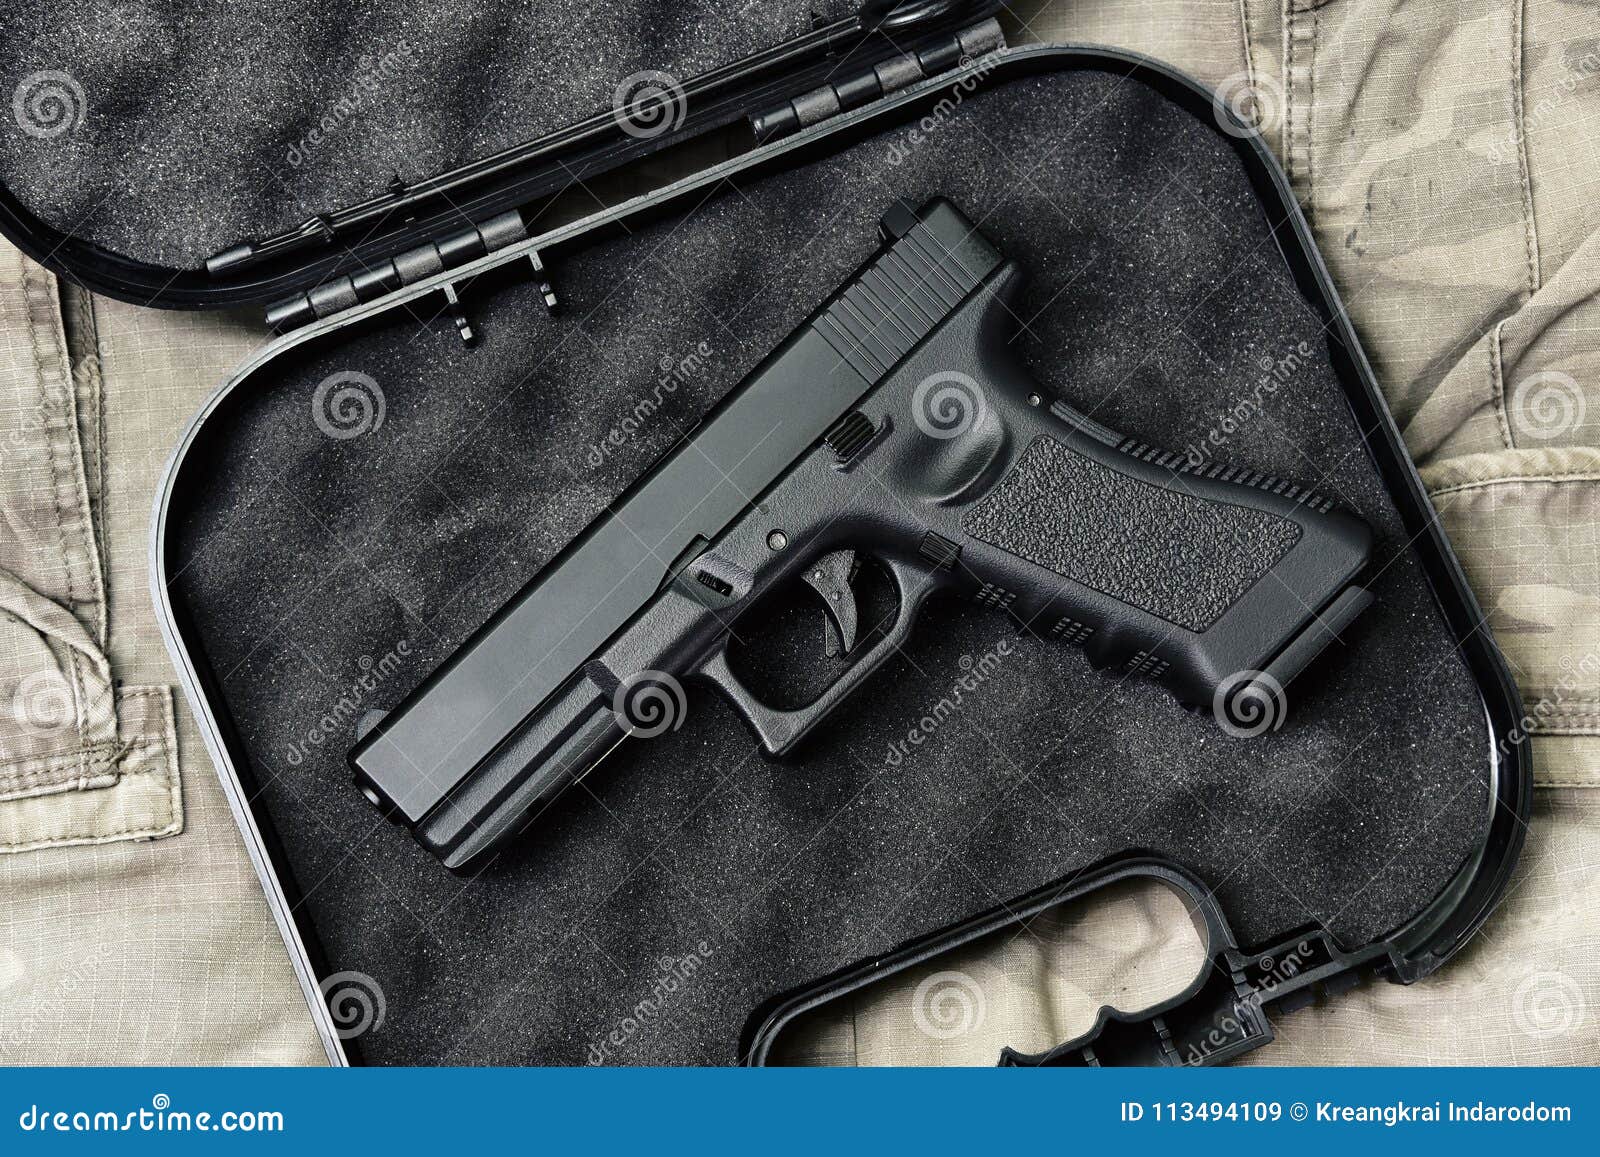 pistol 9mm, gun weapon series, police handgun close-up.